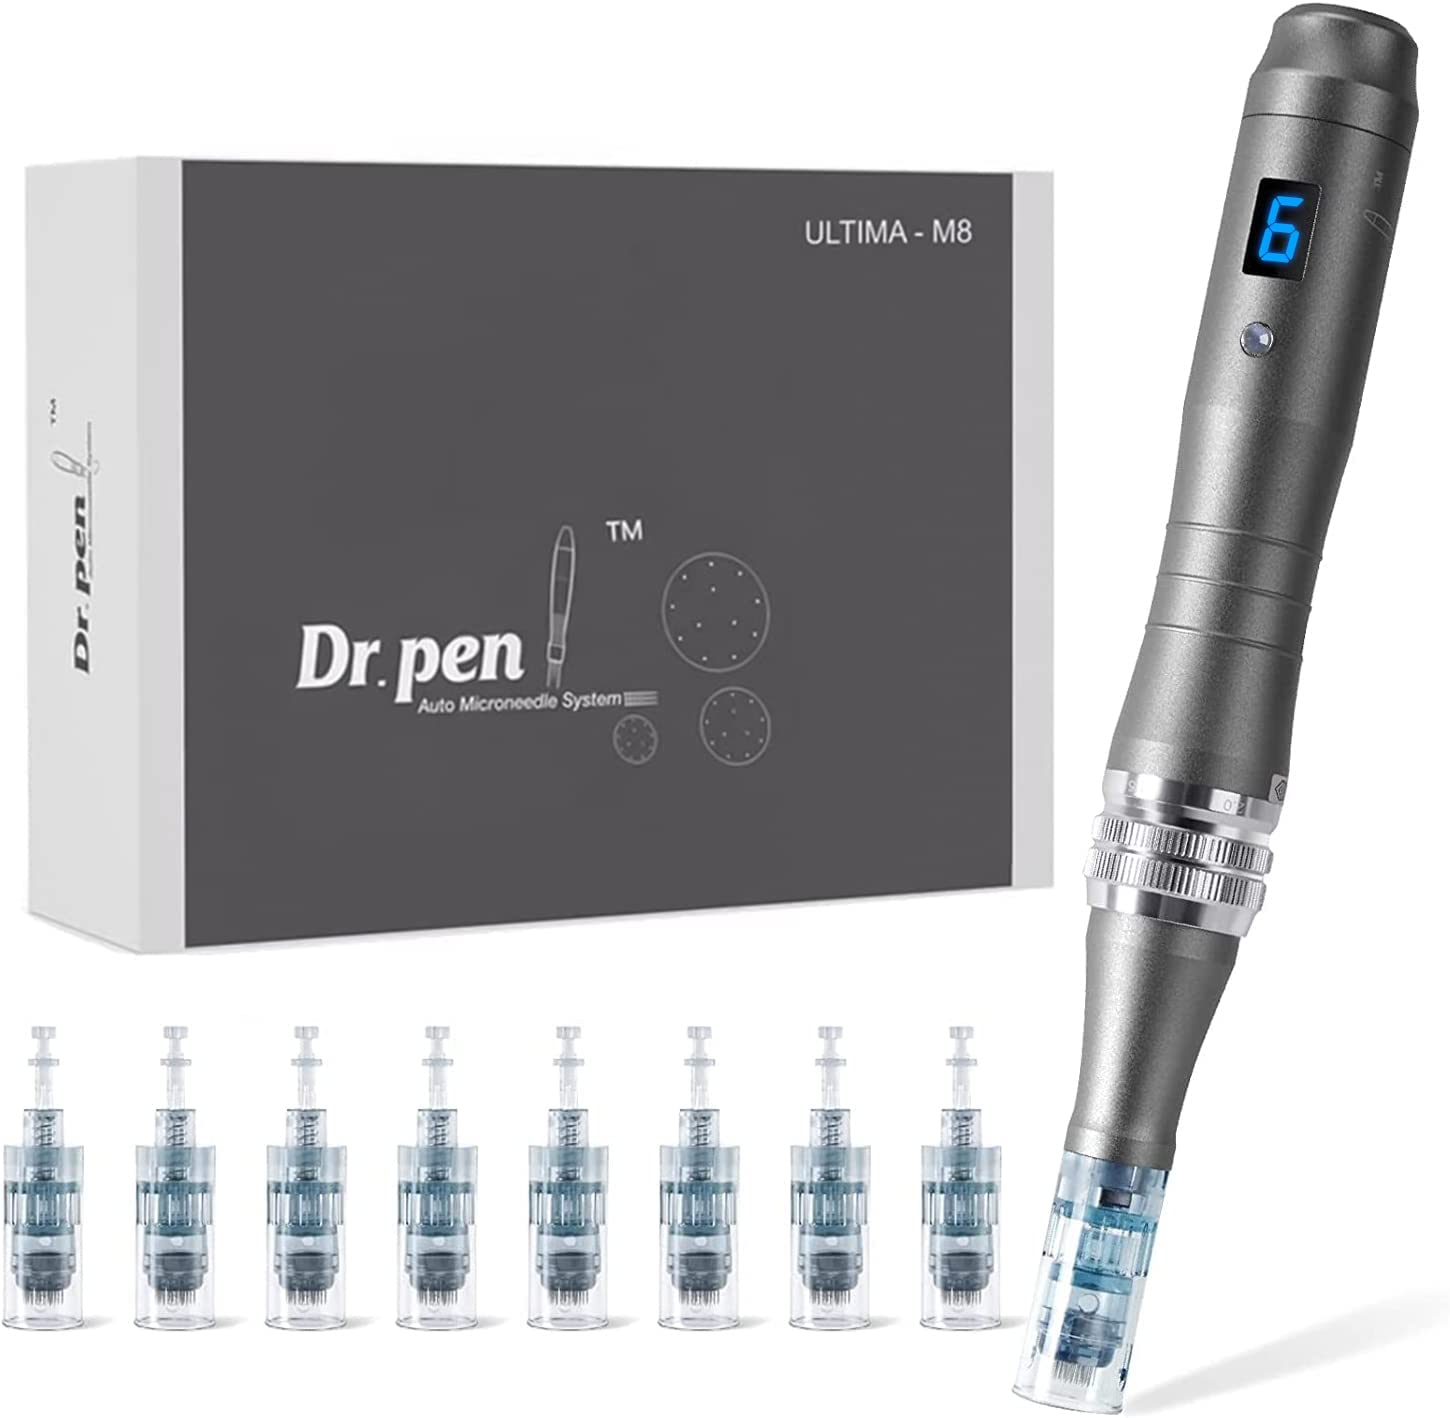 Dr. Pen Ultima M8 Professional Microneedling Pen, Wireless Derma Pen, Adjustable Microneedle Dermapen for Face and Body